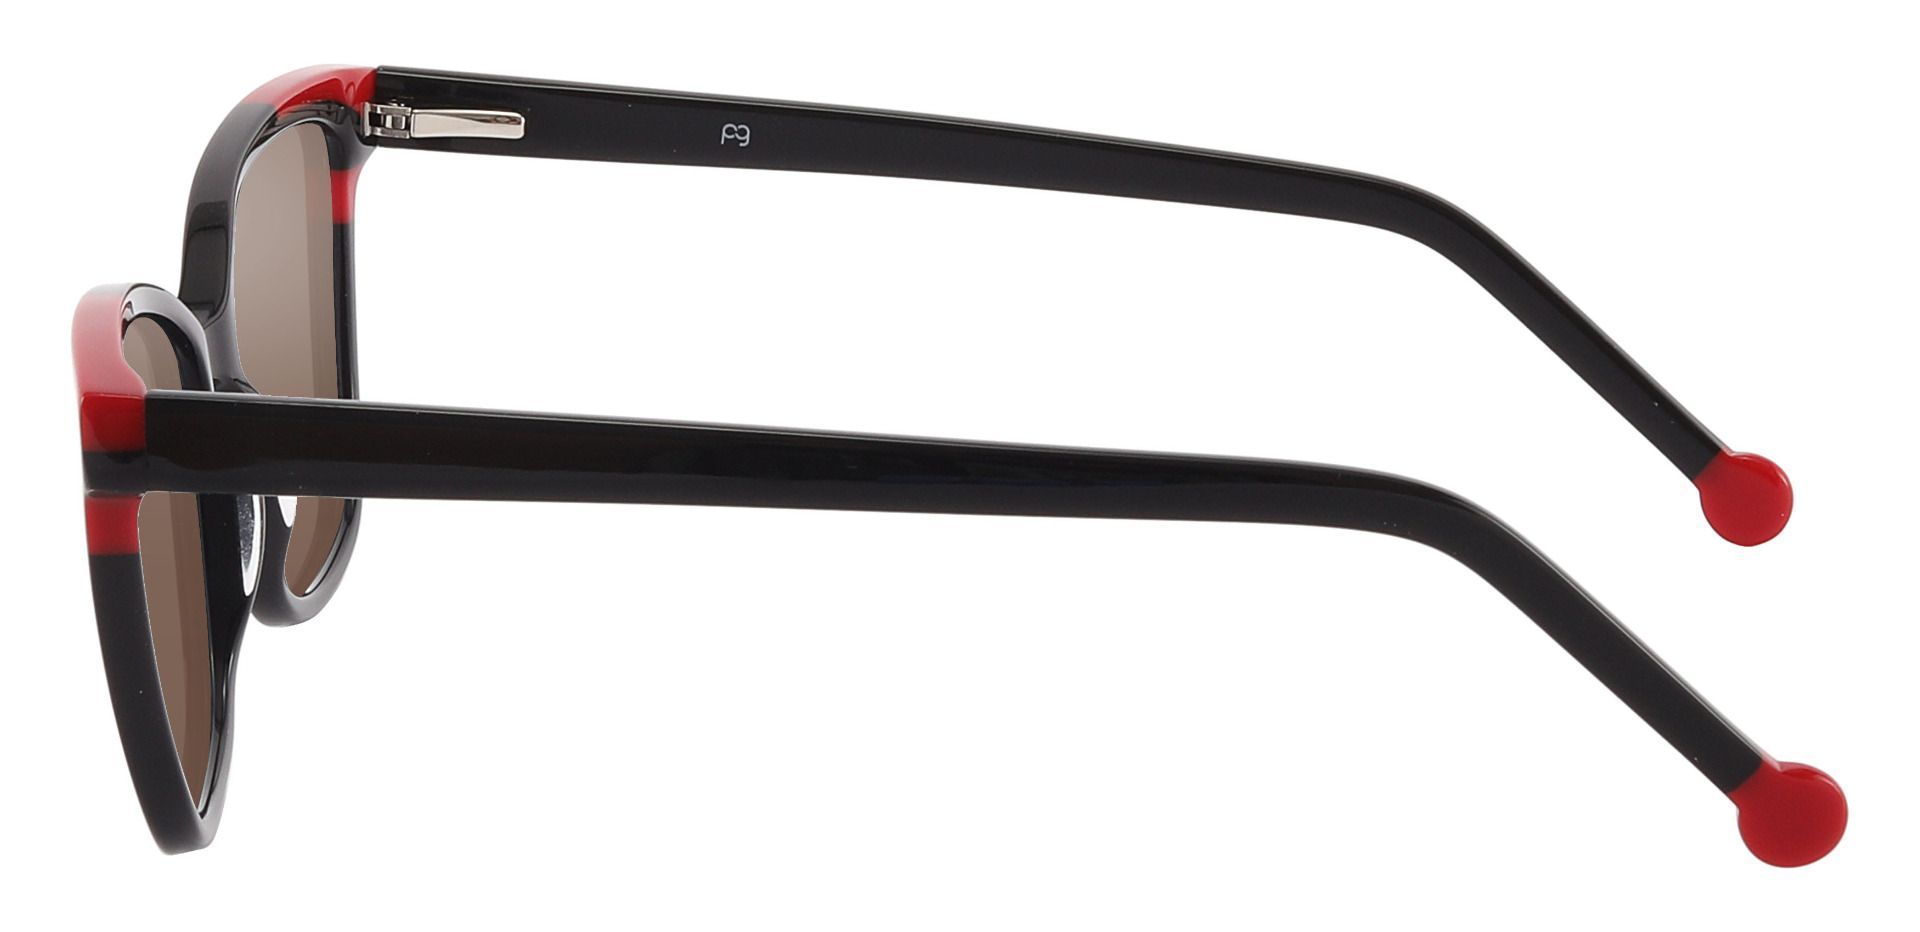 Shania Cat Eye Reading Sunglasses - Black Frame With Brown Lenses